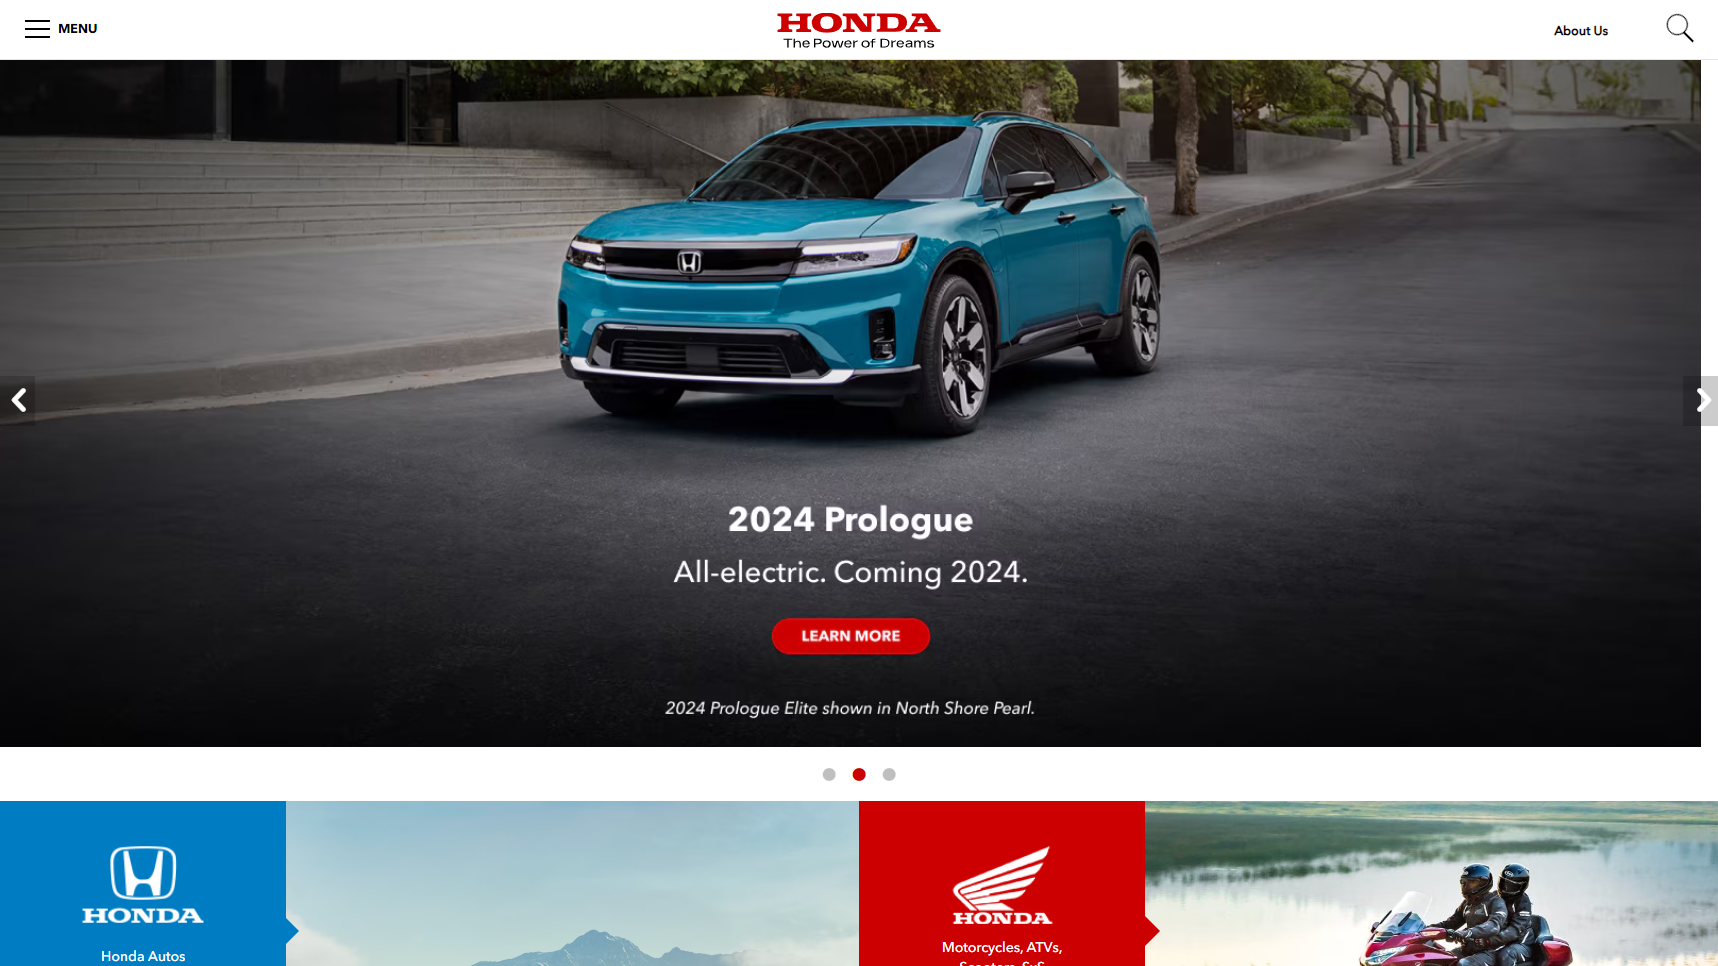 Honda - Vehicle Manufacturer